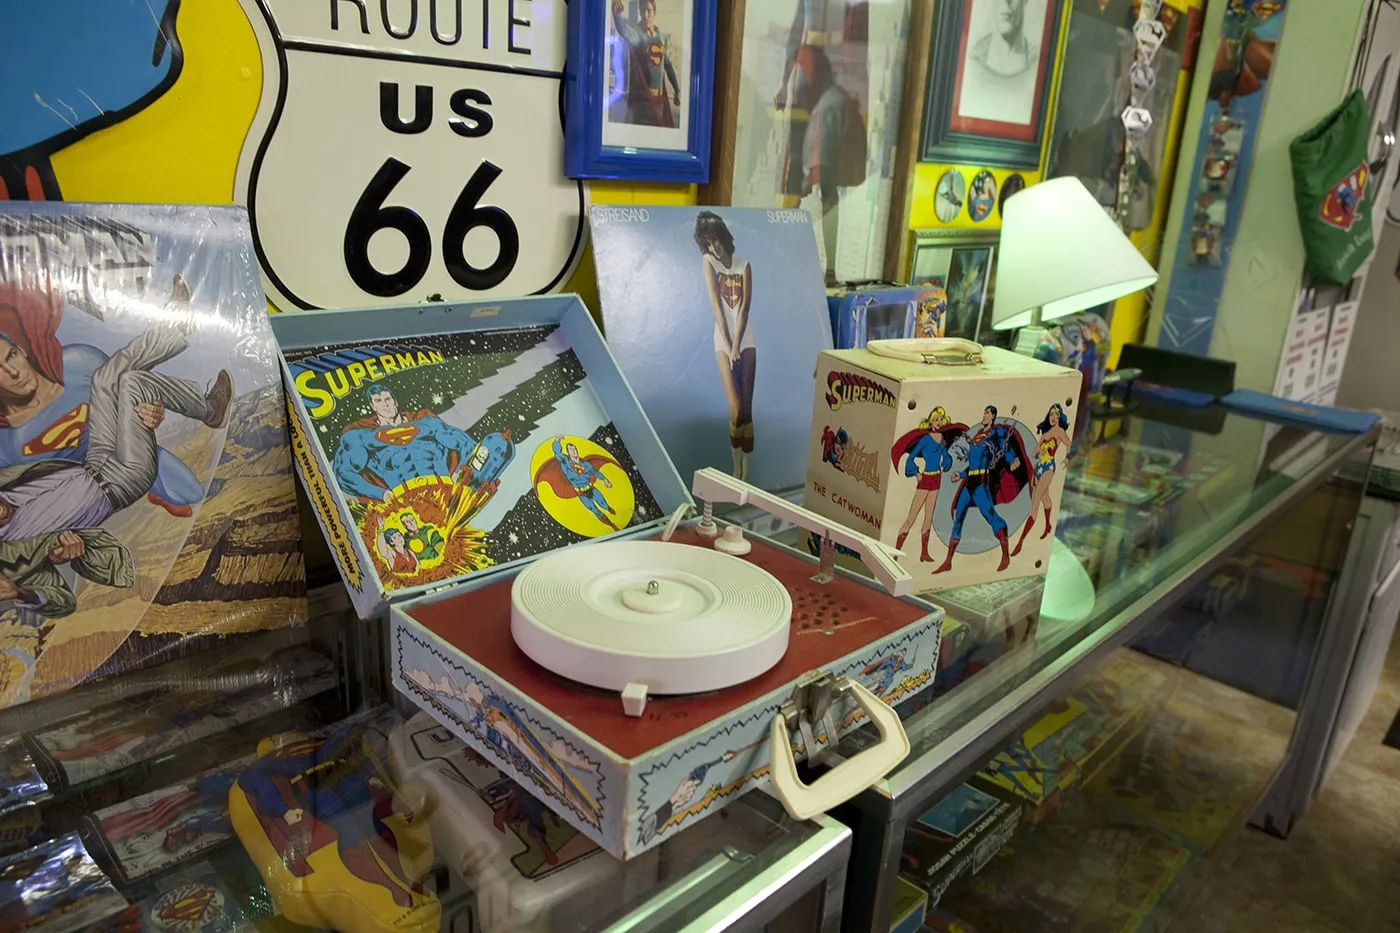 Superman record player. SuperTAM on 66 - Superman Memorabilia & Ice Cream in Carterville, Missouri